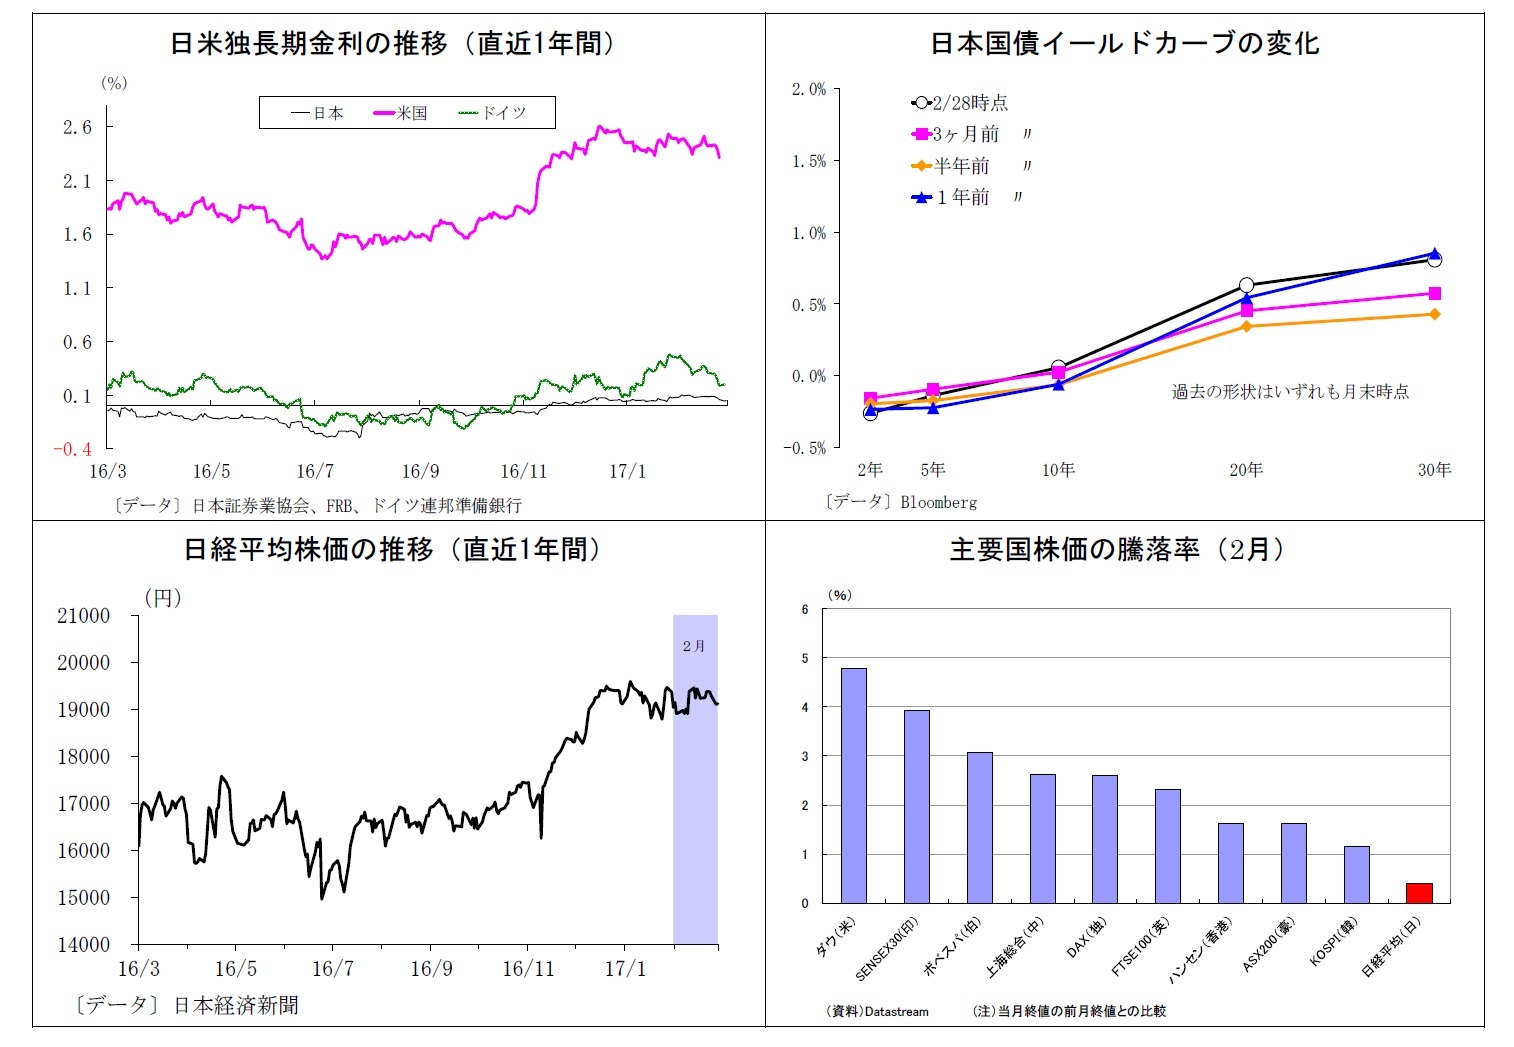 日米独長期金利の推移（直近1年間）/日本国債イールドカーブの変化/日経平均株価の推移（直近1年間）/主要国株価の騰落率（2月）